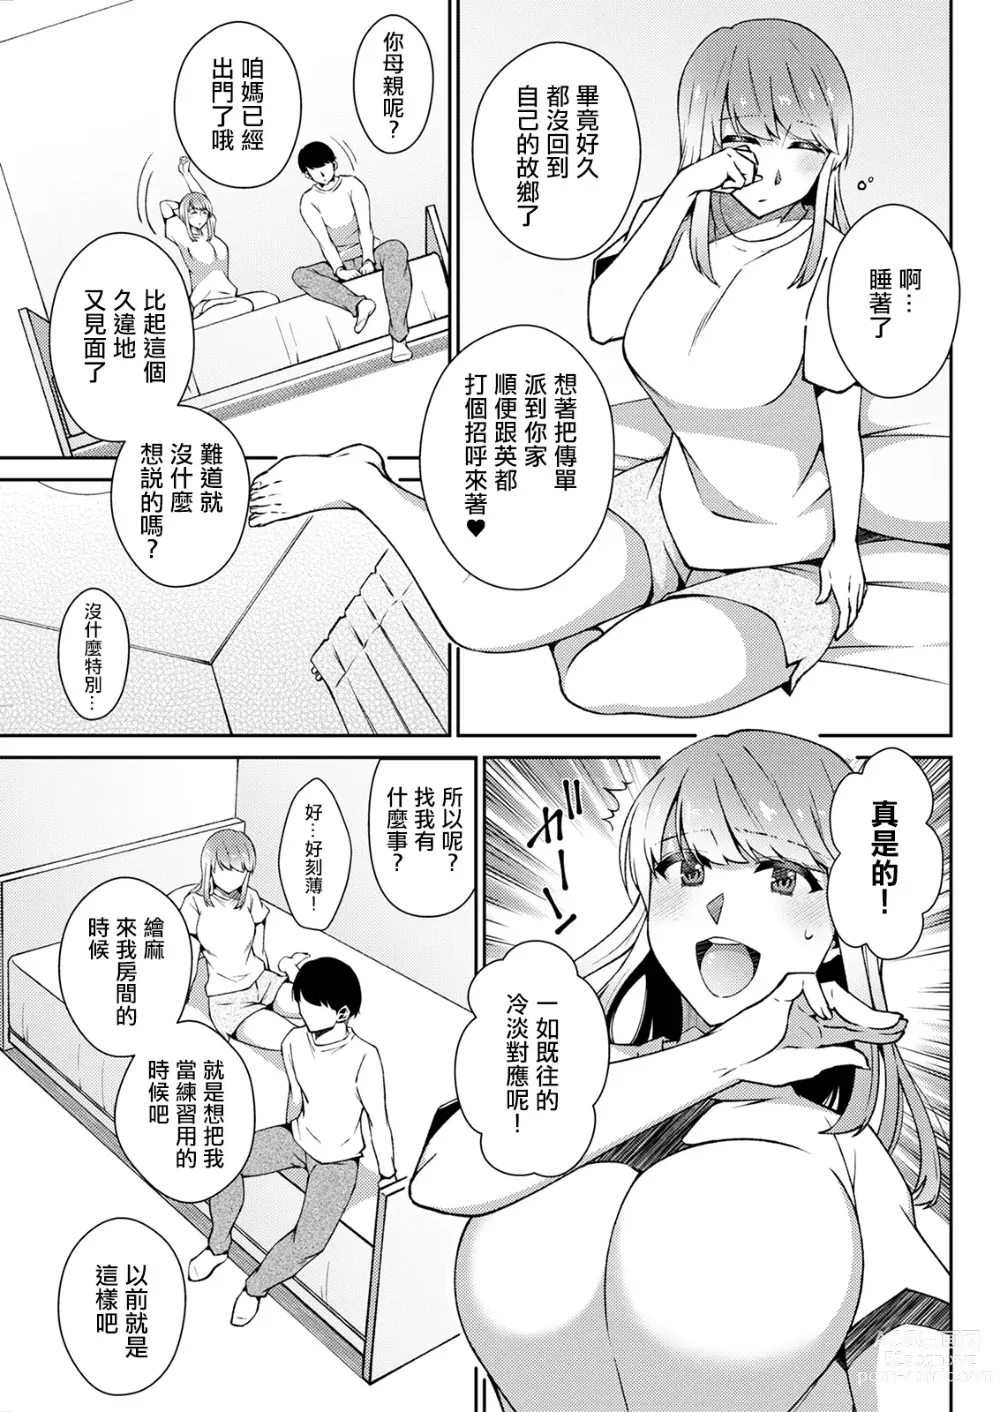 Page 3 of manga Koi no Wazurai